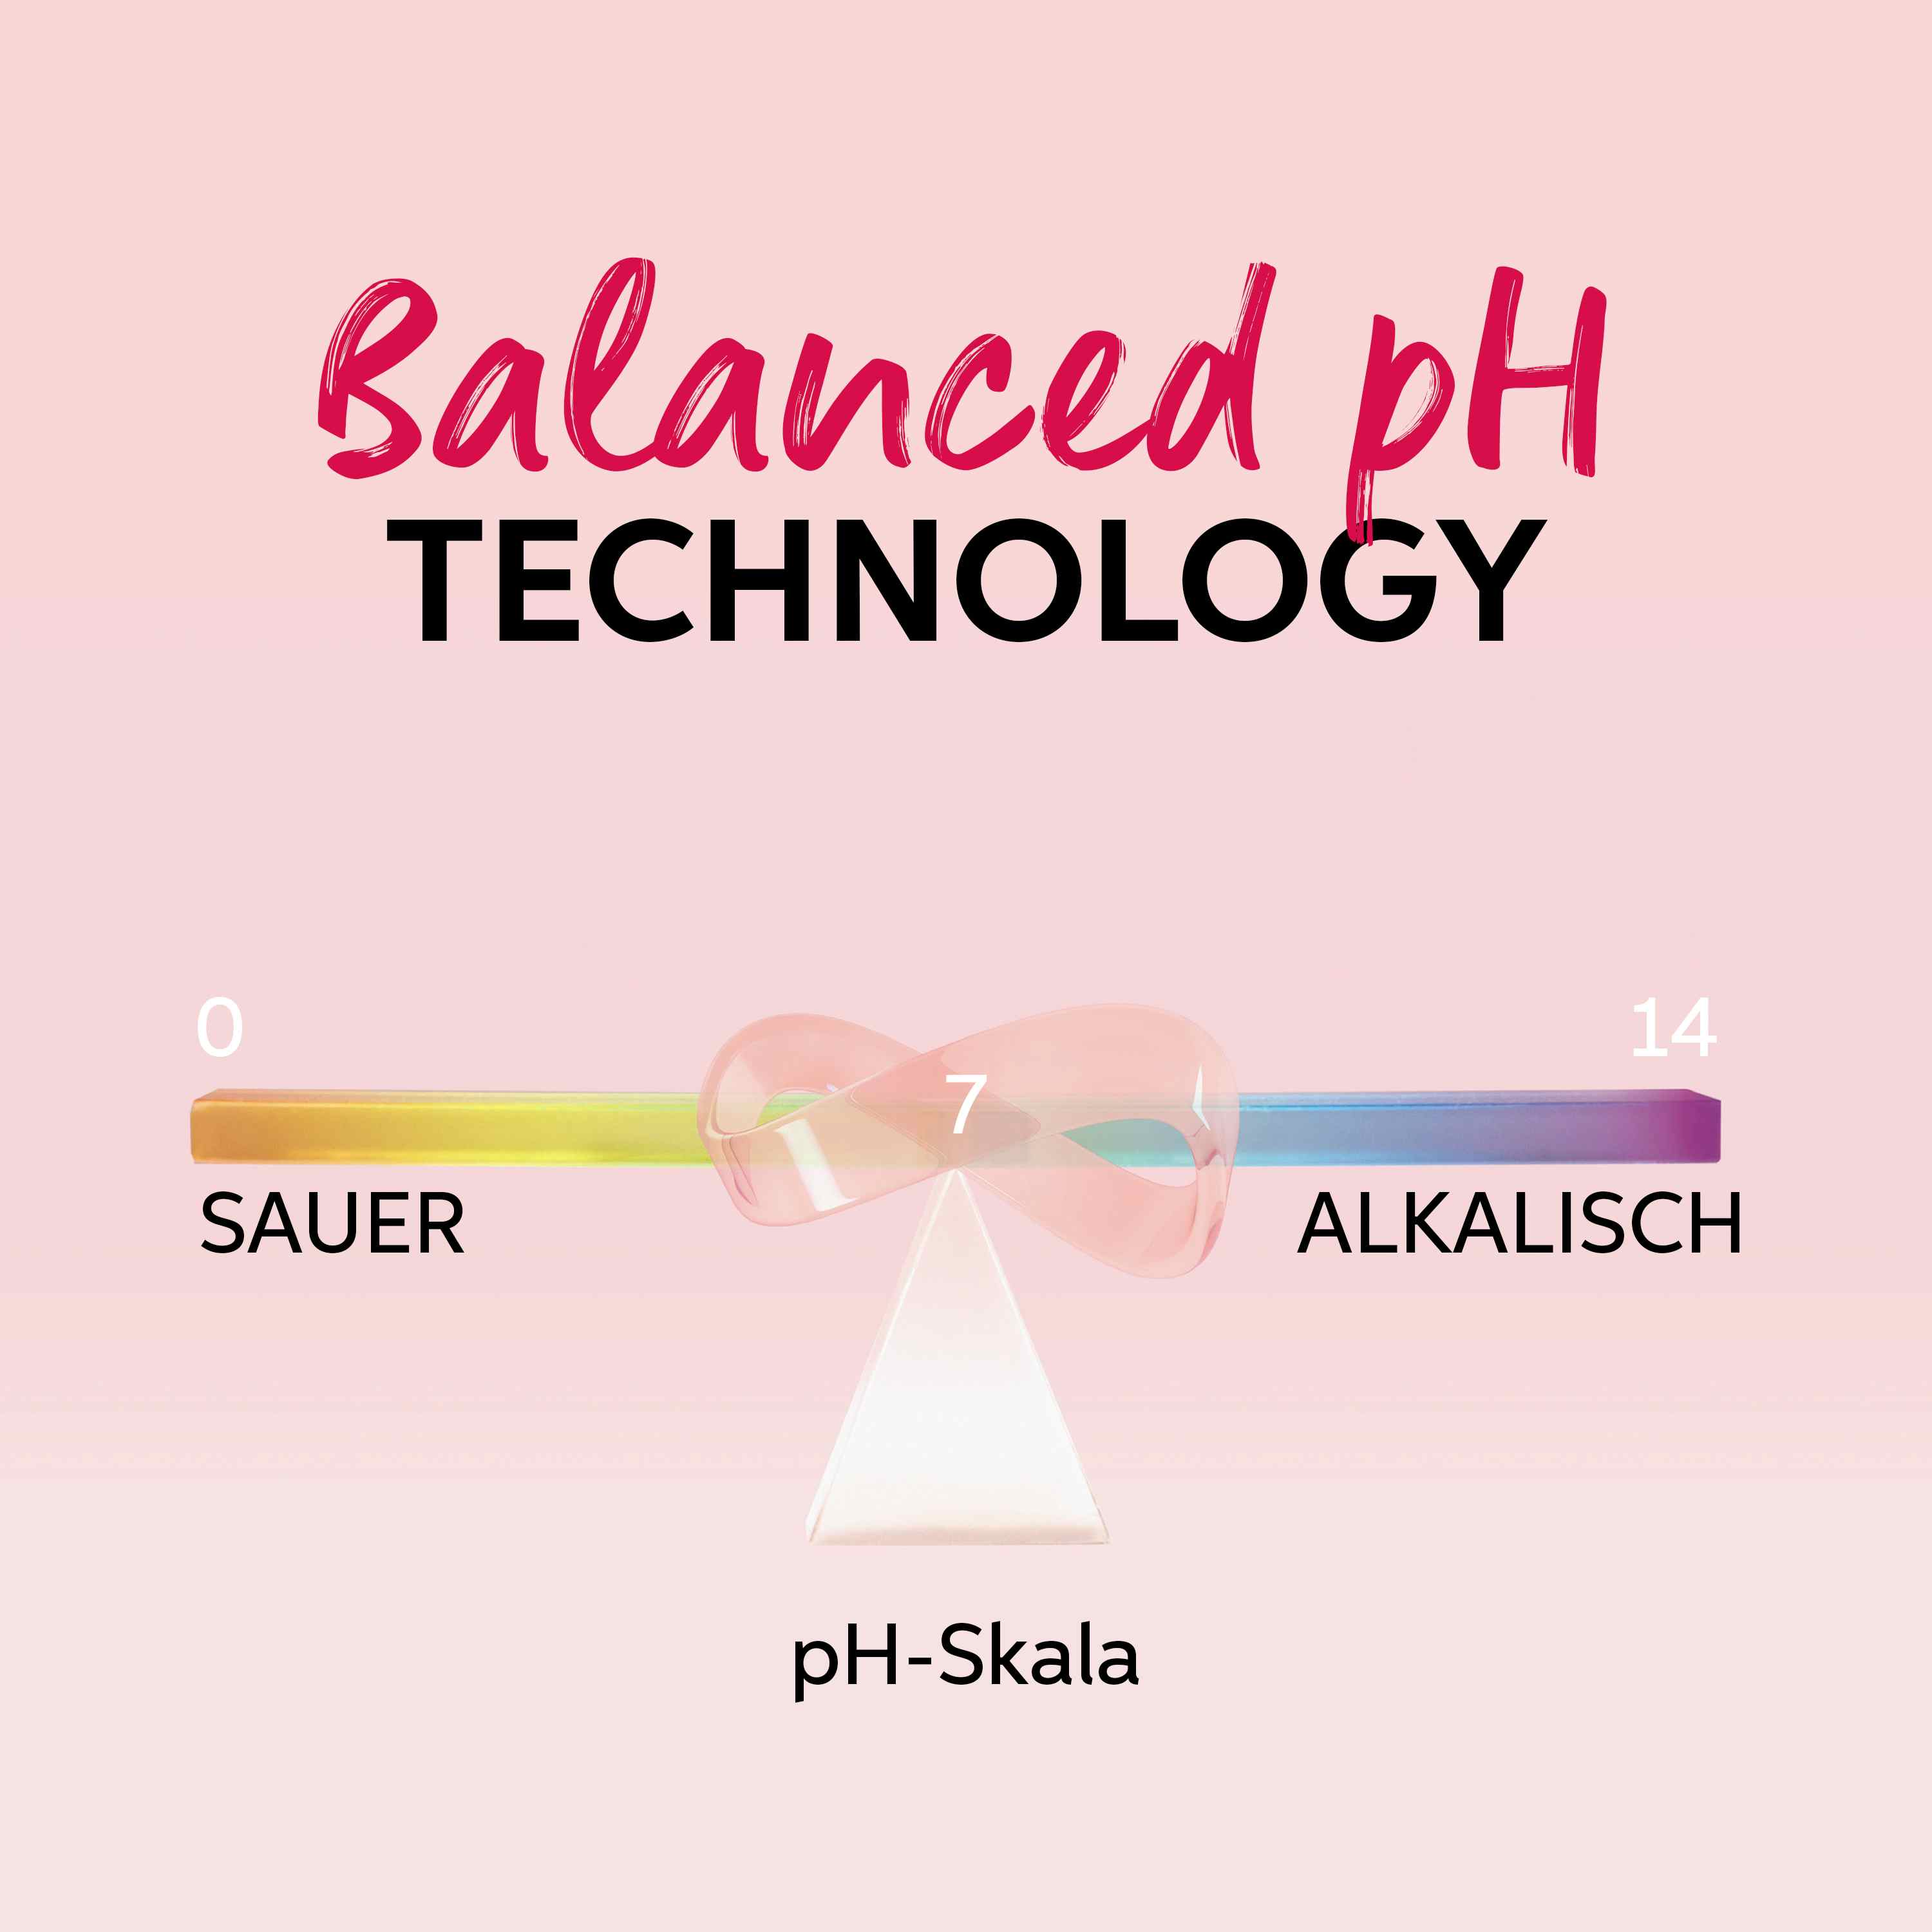 shinefinity-balanced-ph-technoloy-banner-wellastore